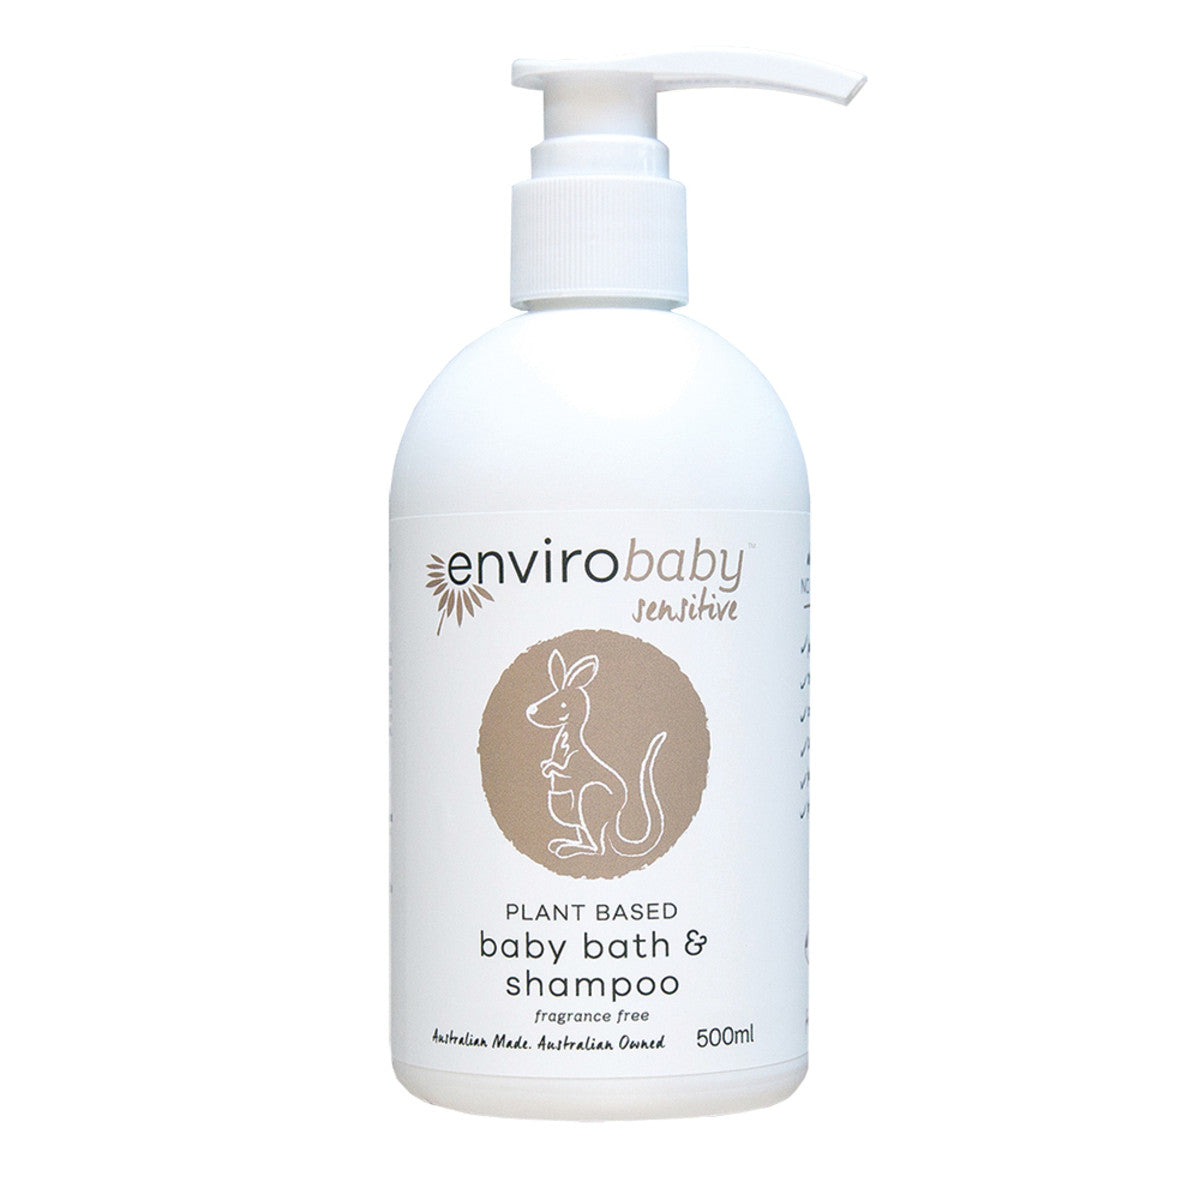 EnviroBaby - Sensitive Baby Bath Shampoo Fragrance Free 500ml